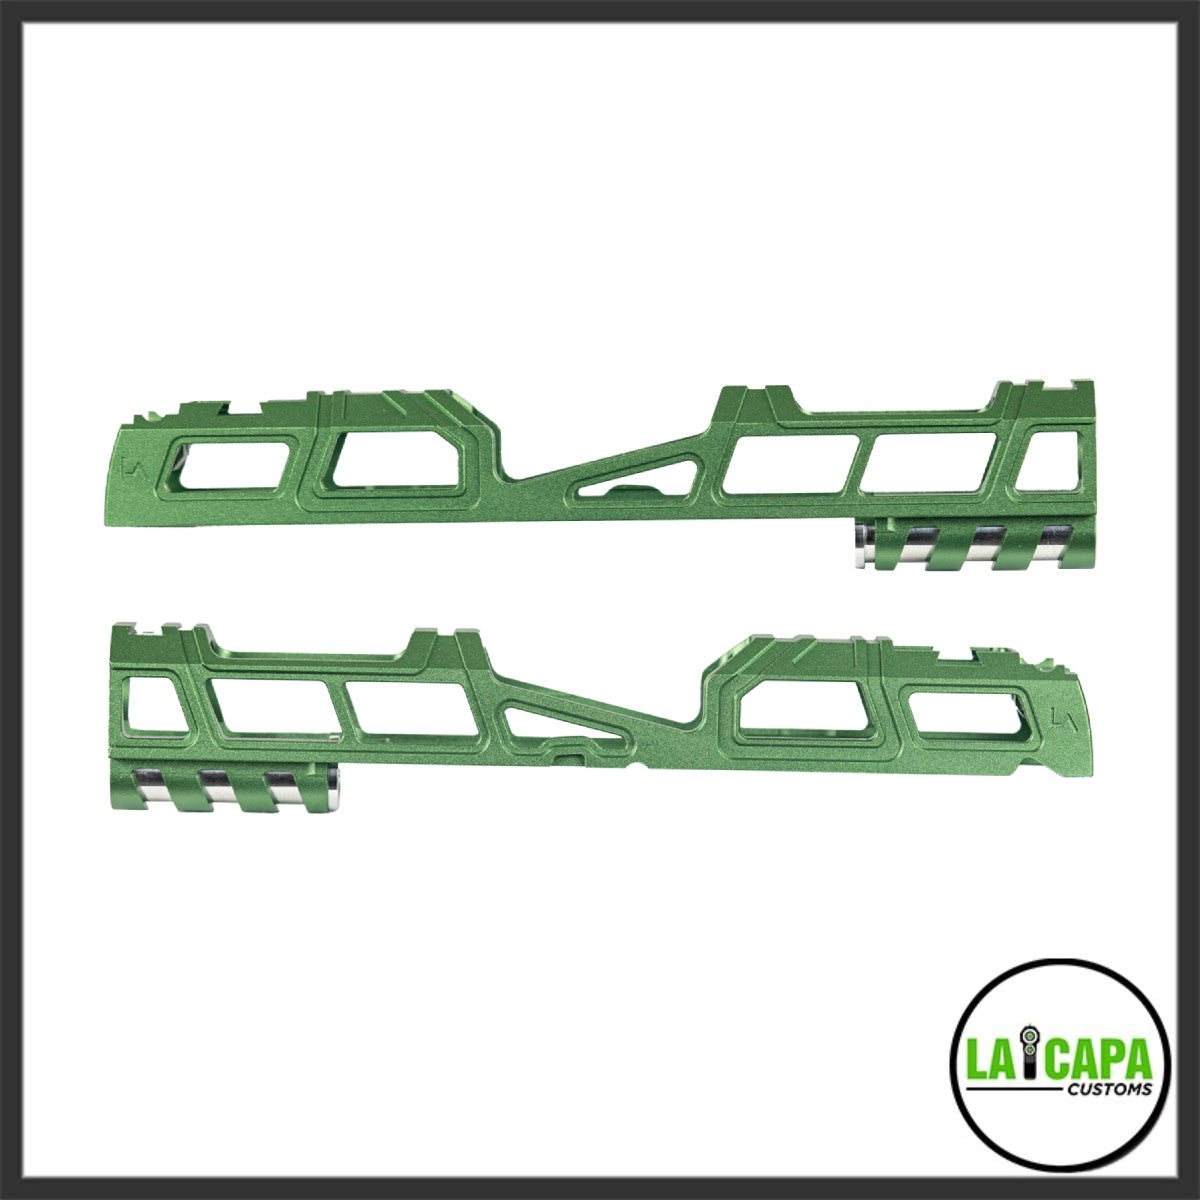 LA Capa Customs 5.1 “Hyper” Aluminum Slide - Green